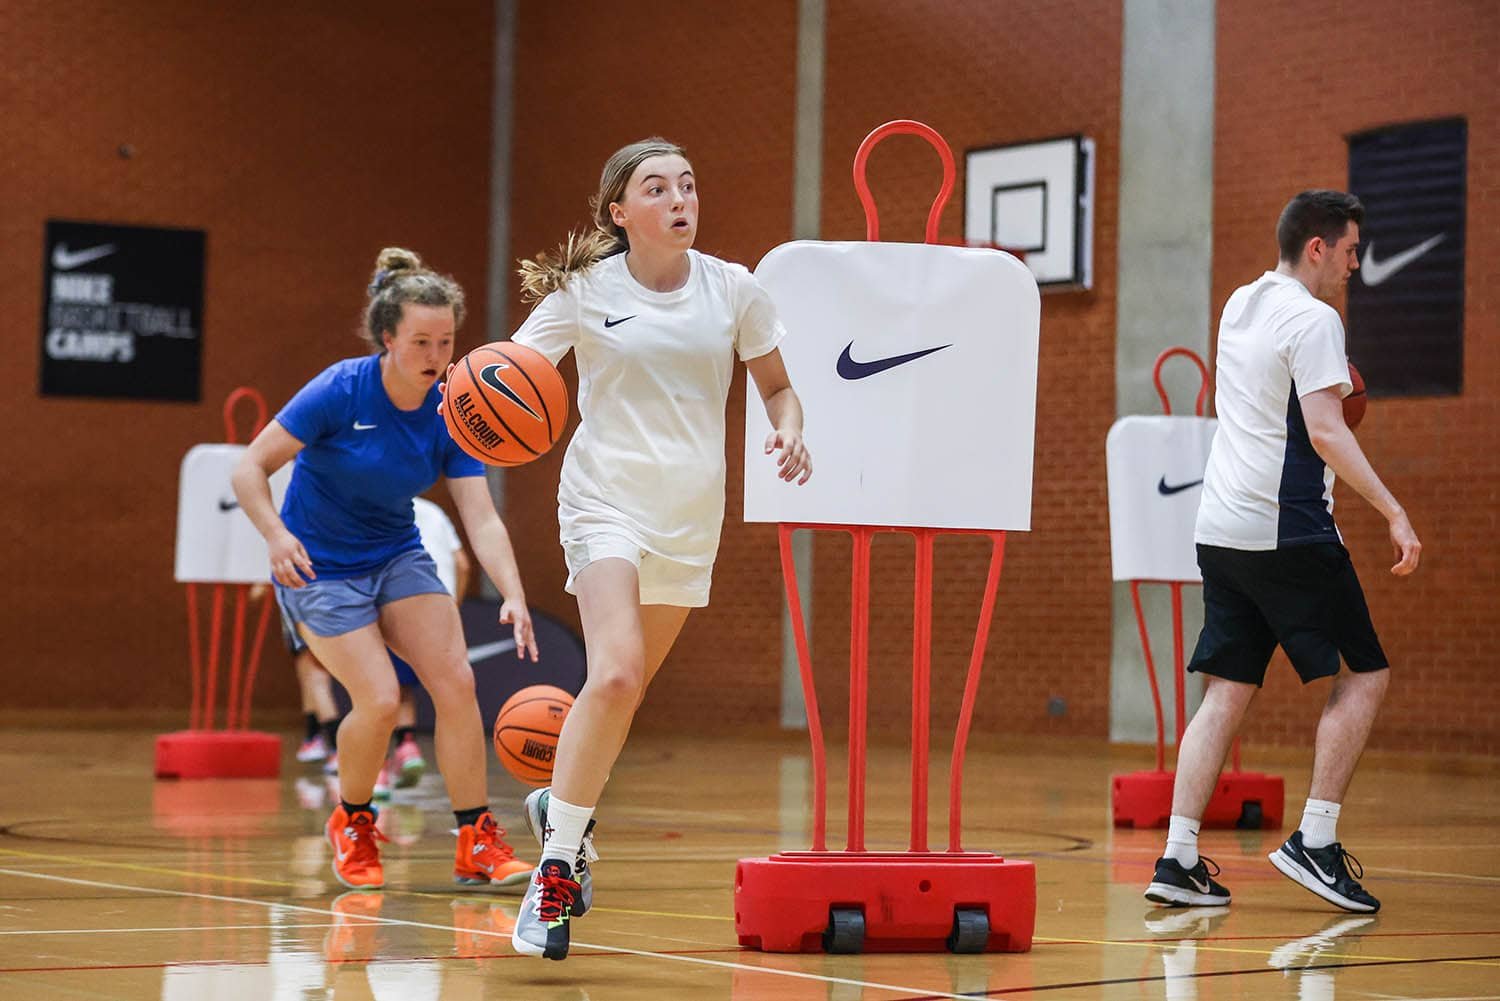 Nike Basketball and English Camps — Euro Camps